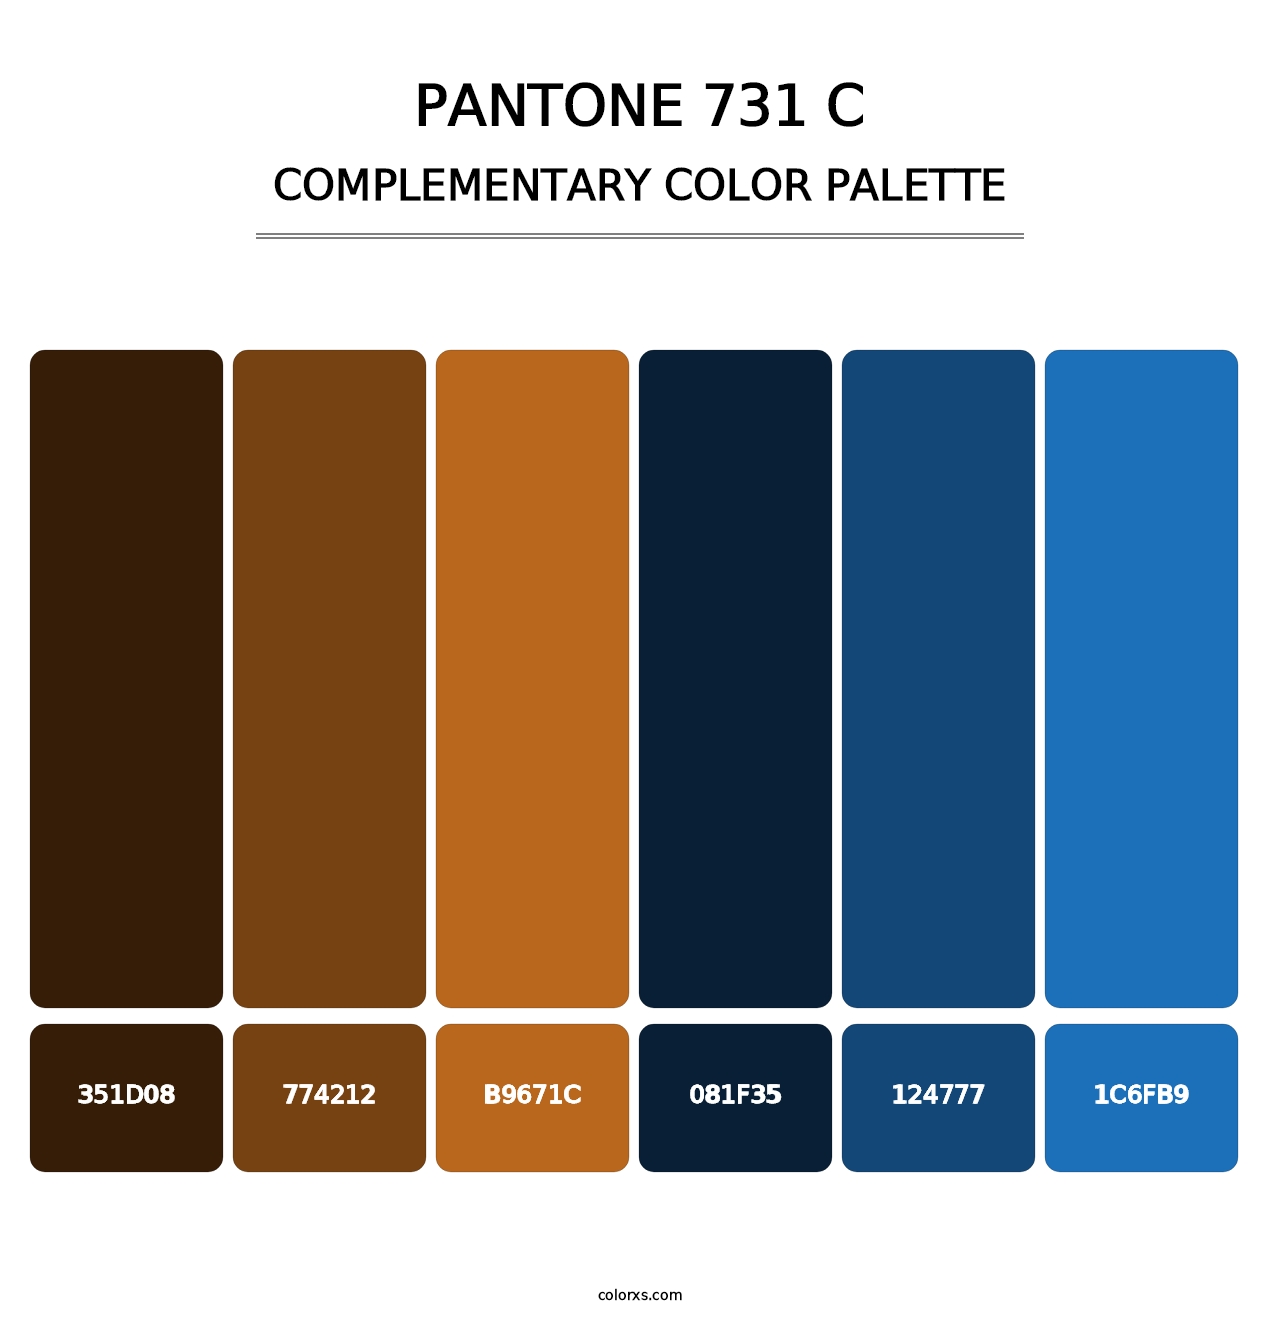 PANTONE 731 C - Complementary Color Palette